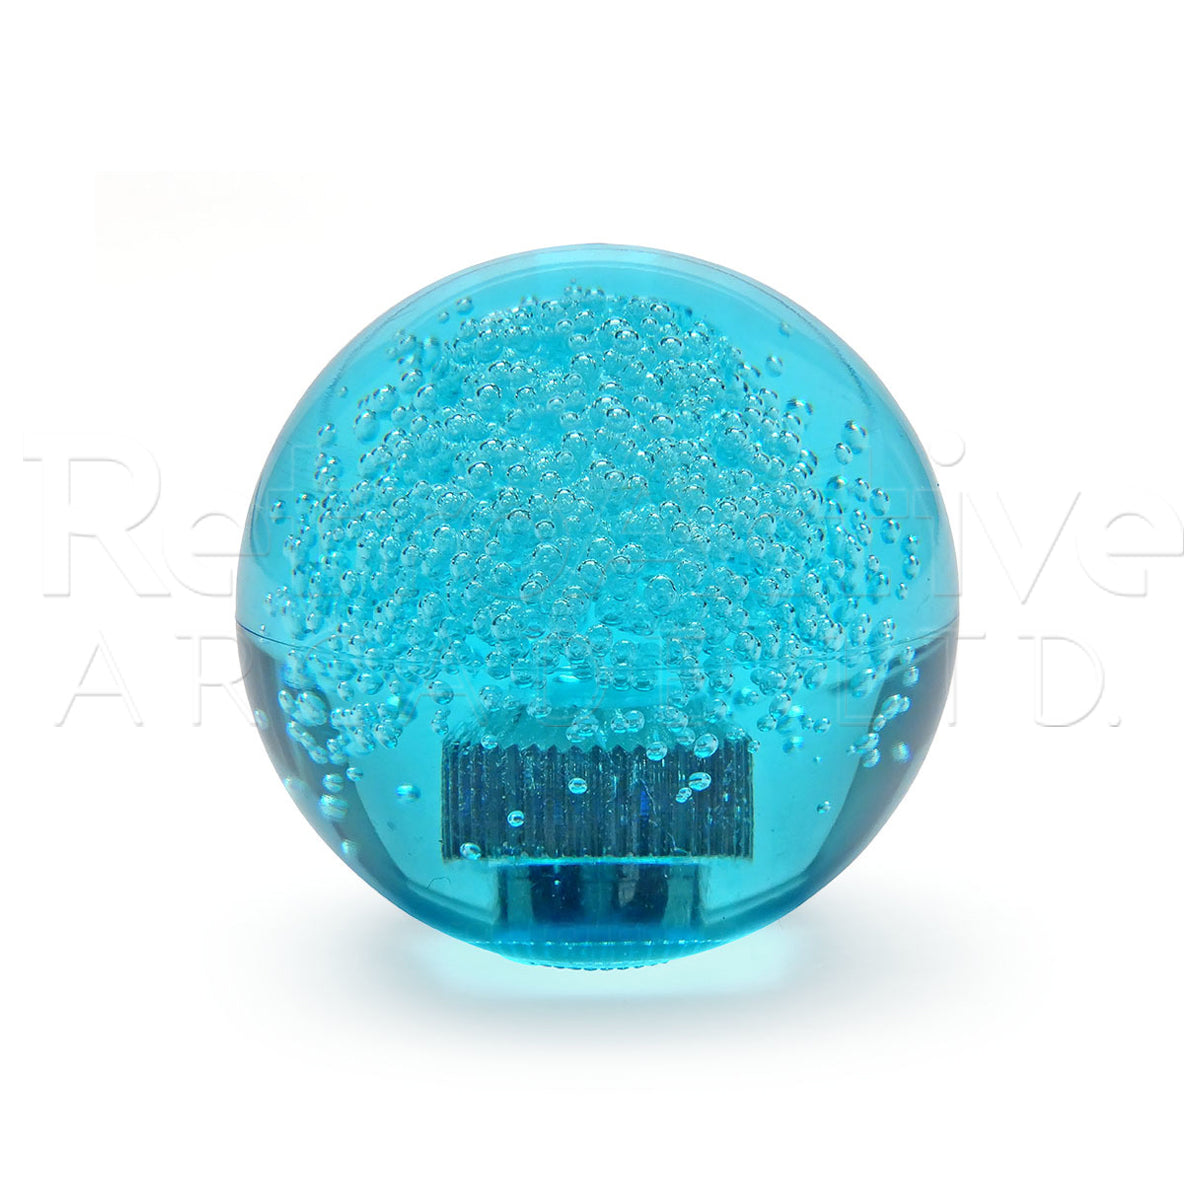 39mm Translucent "Bubble" Ball Top - Cosmetic Defects Joysticks Universal - Retro Active Arcade